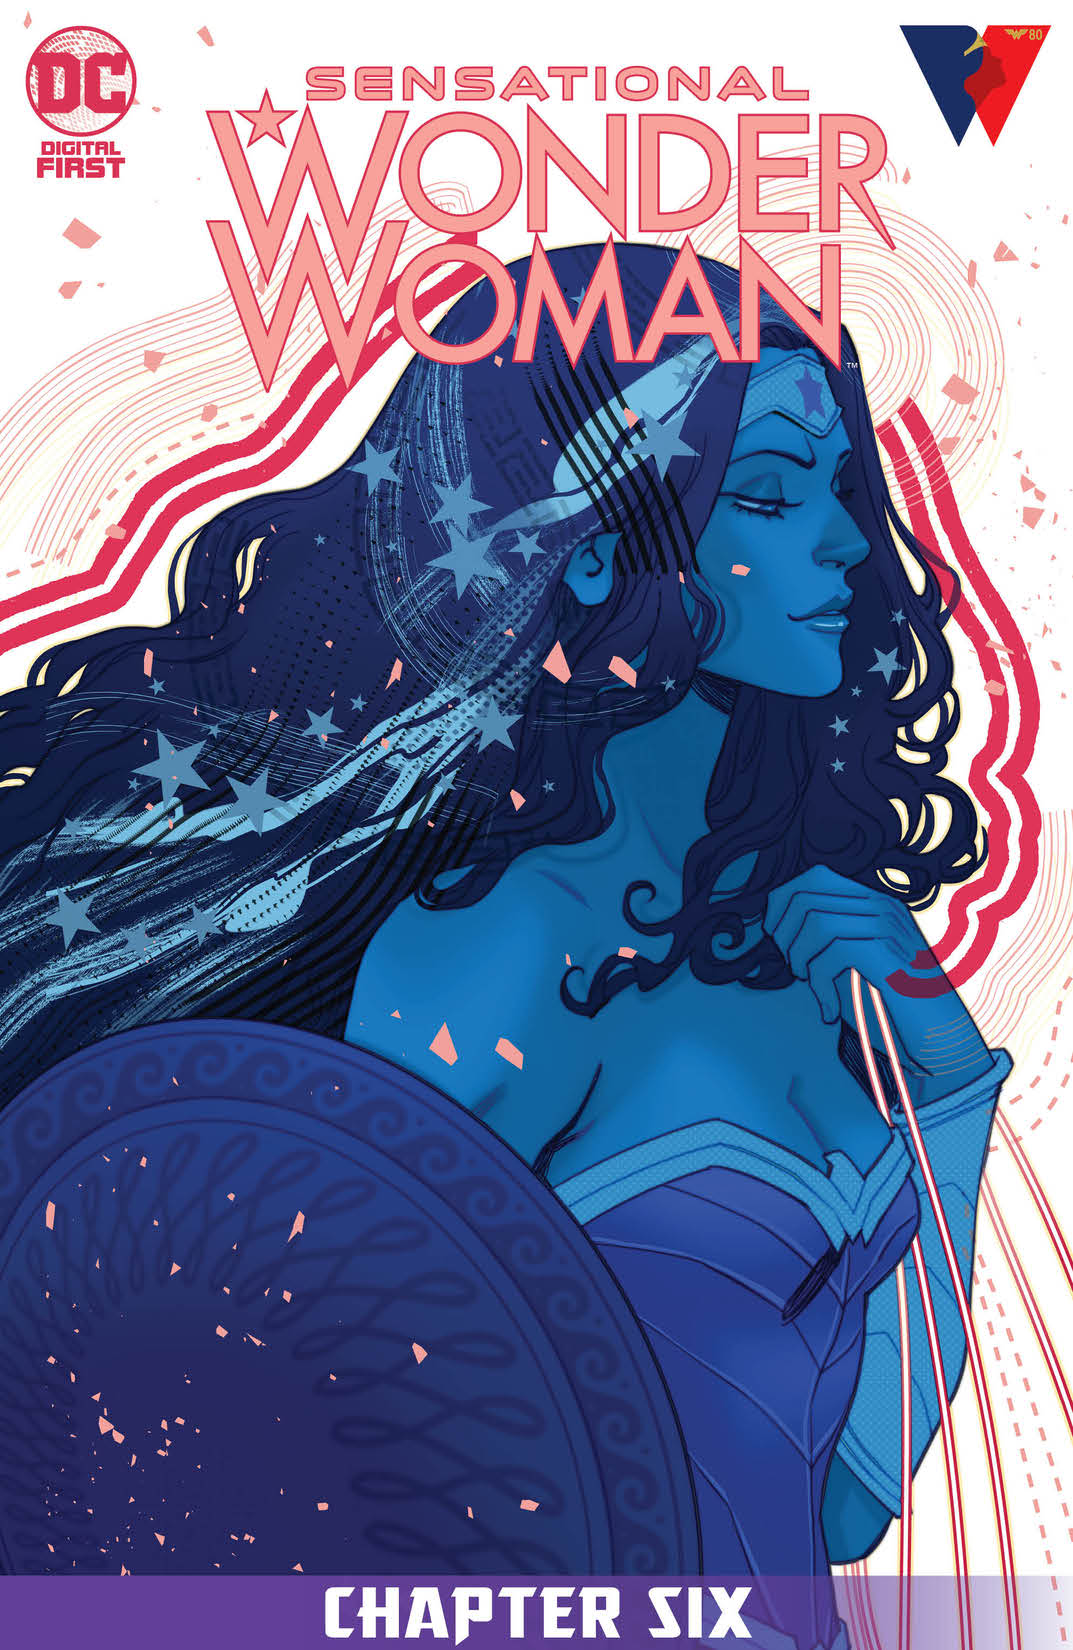 Sensational Wonder Woman #6 preview images